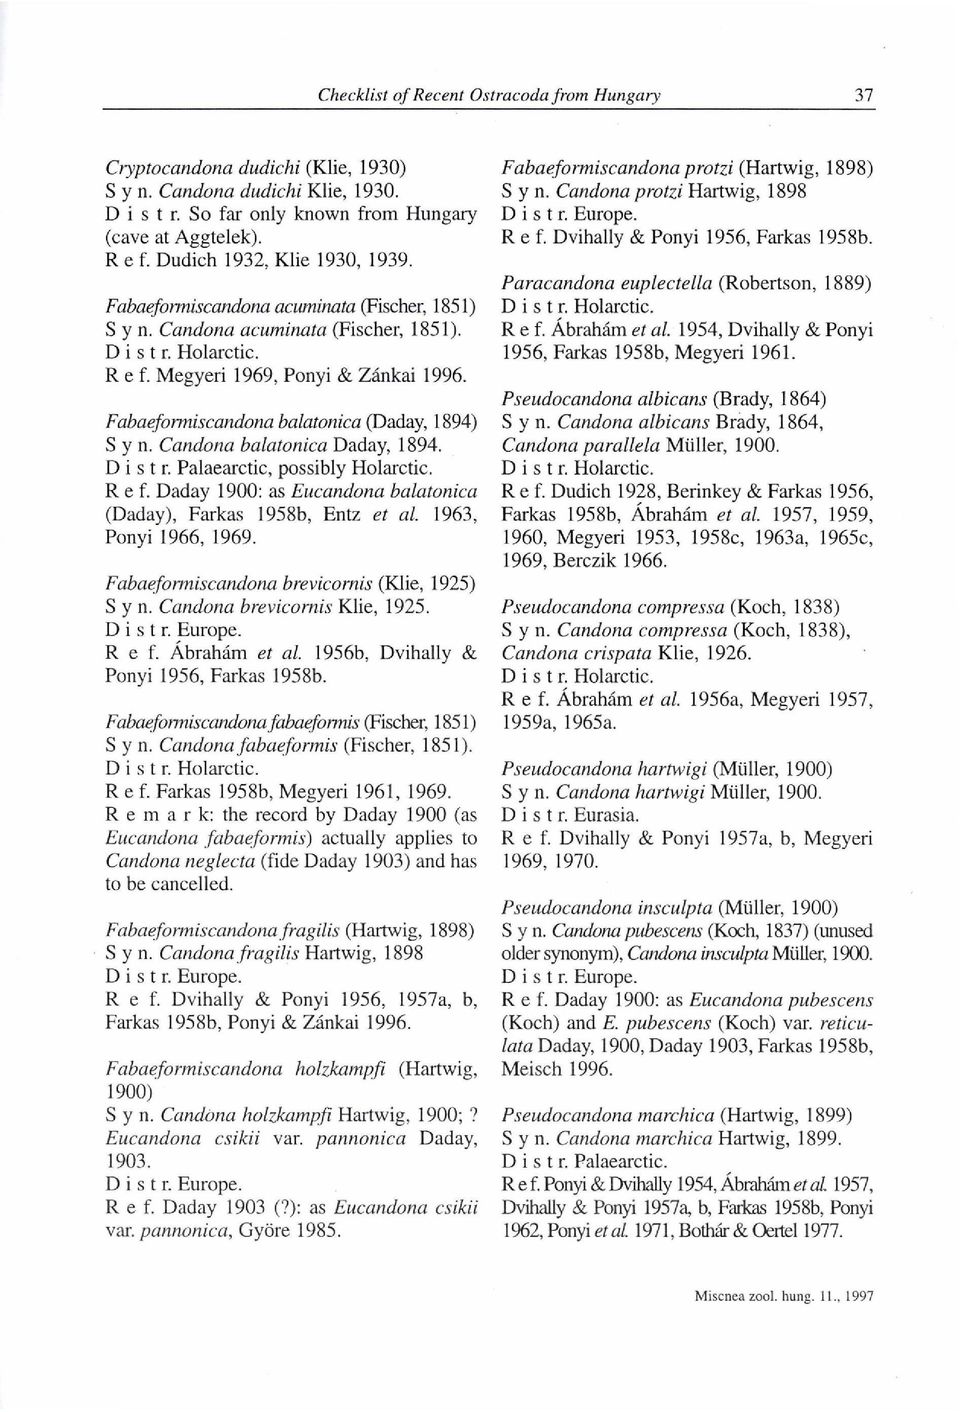 Candona balatonica Daday, 1894. Distr. Palaearctic, possibly Holarctic. Ref. Daday 1900: as Eucandona balatonica (Daday), Farkas 1958b, Entz et al. 1963, Ponyi 1966, 1969.